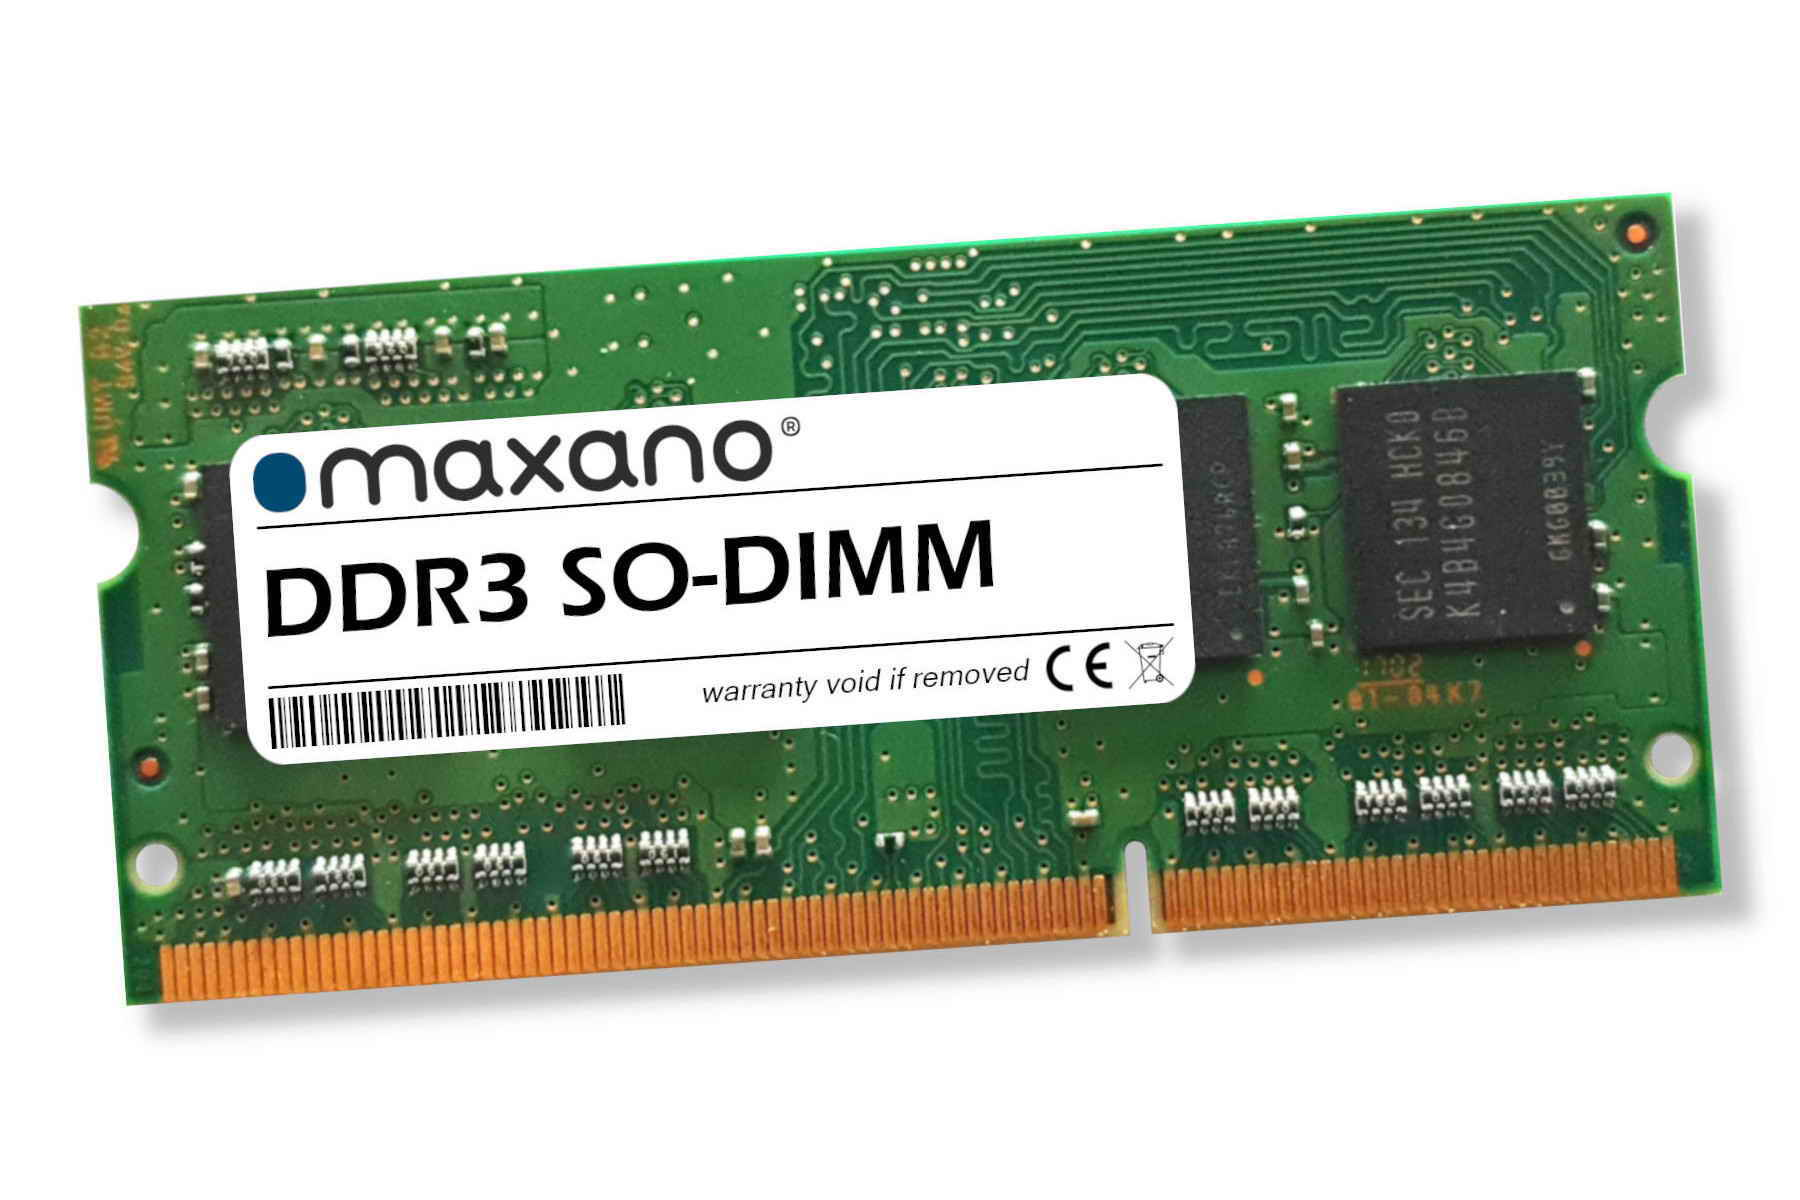 für Asustor GB SDRAM SO-DIMM) RAM Arbeitsspeicher AS6104T MAXANO (PC3-12800 4GB 4